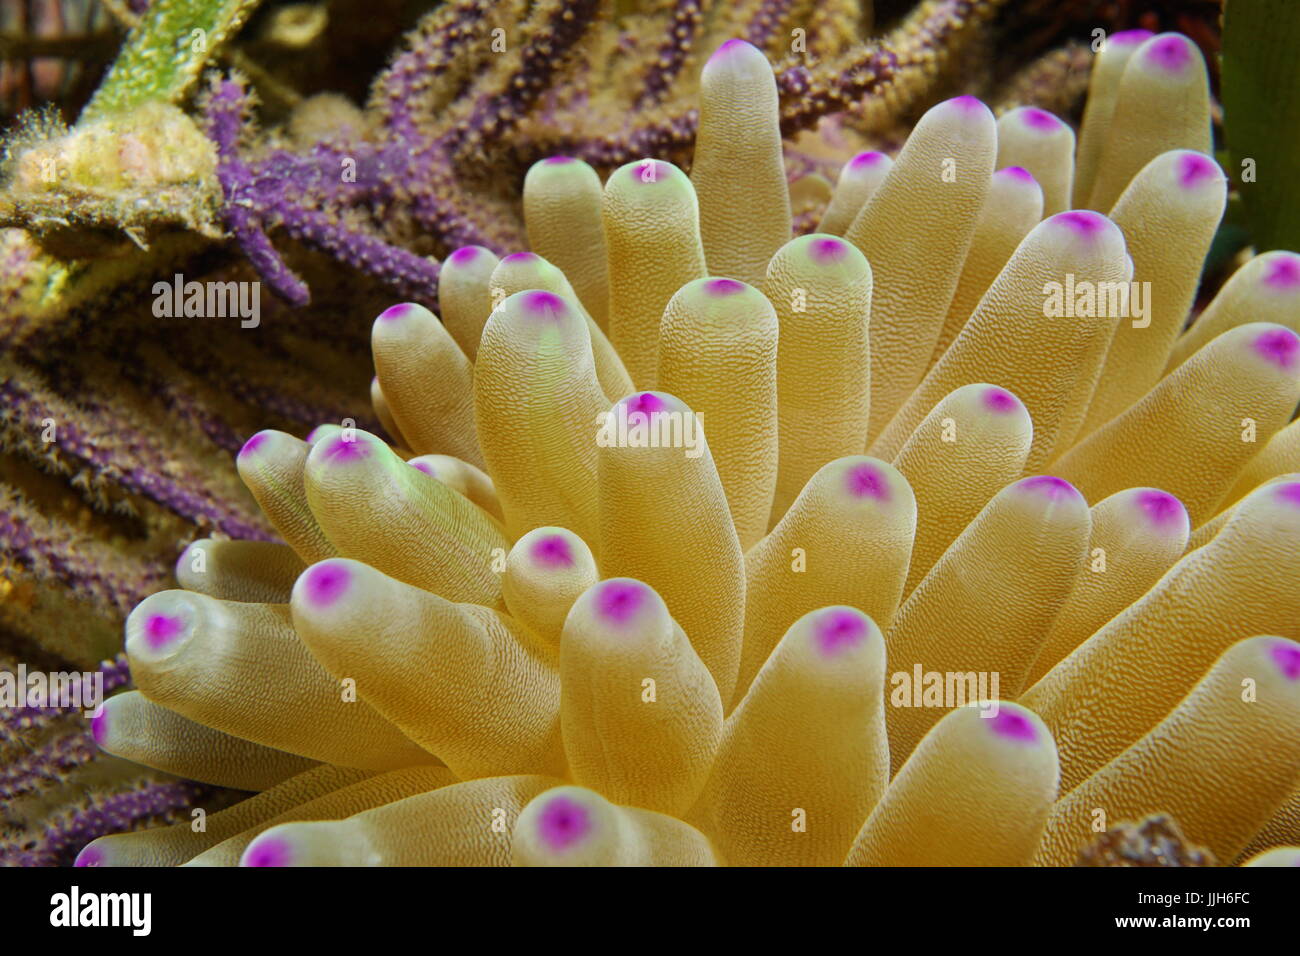 Seeanemone Tentakeln Closeup, Condy Anemone Condylactis Gigantea, Unterwasser Leben im Meer, Karibik, Mittelamerika, Costa Rica Stockfoto